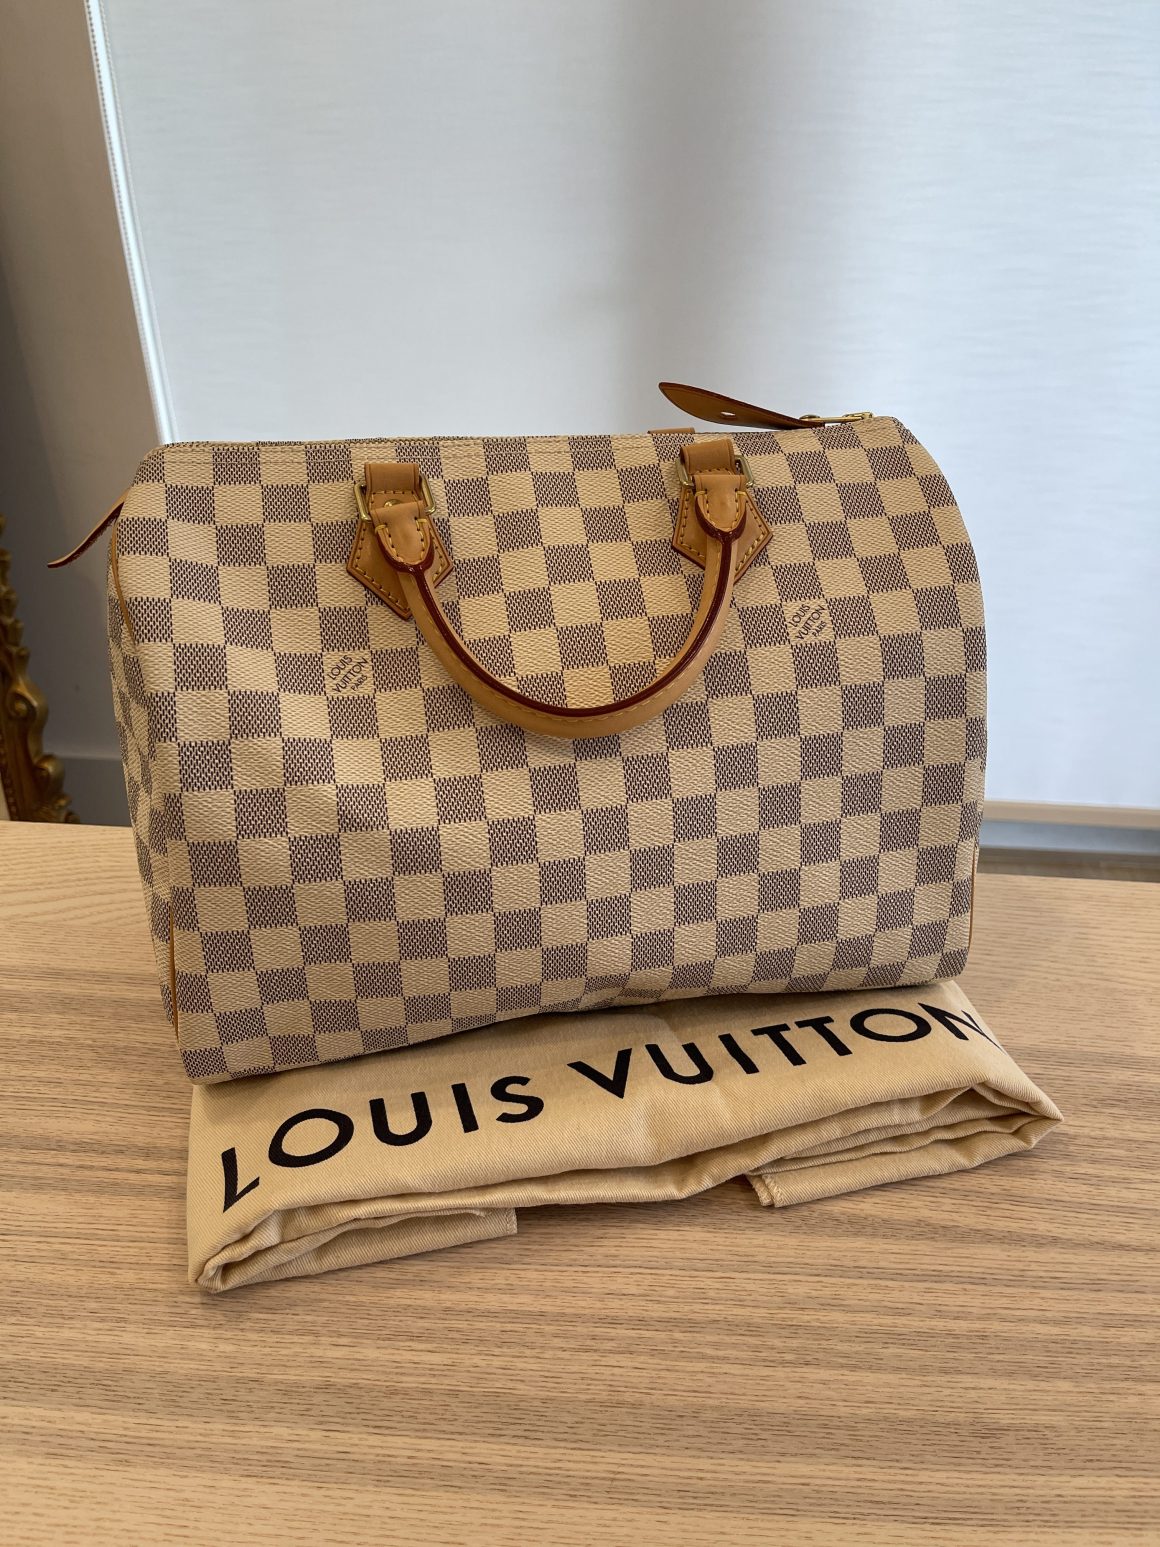 $1300 Louis Vuitton Damier Azur White Checker Speedy 30 Tote Bag Purse -  Lust4Labels